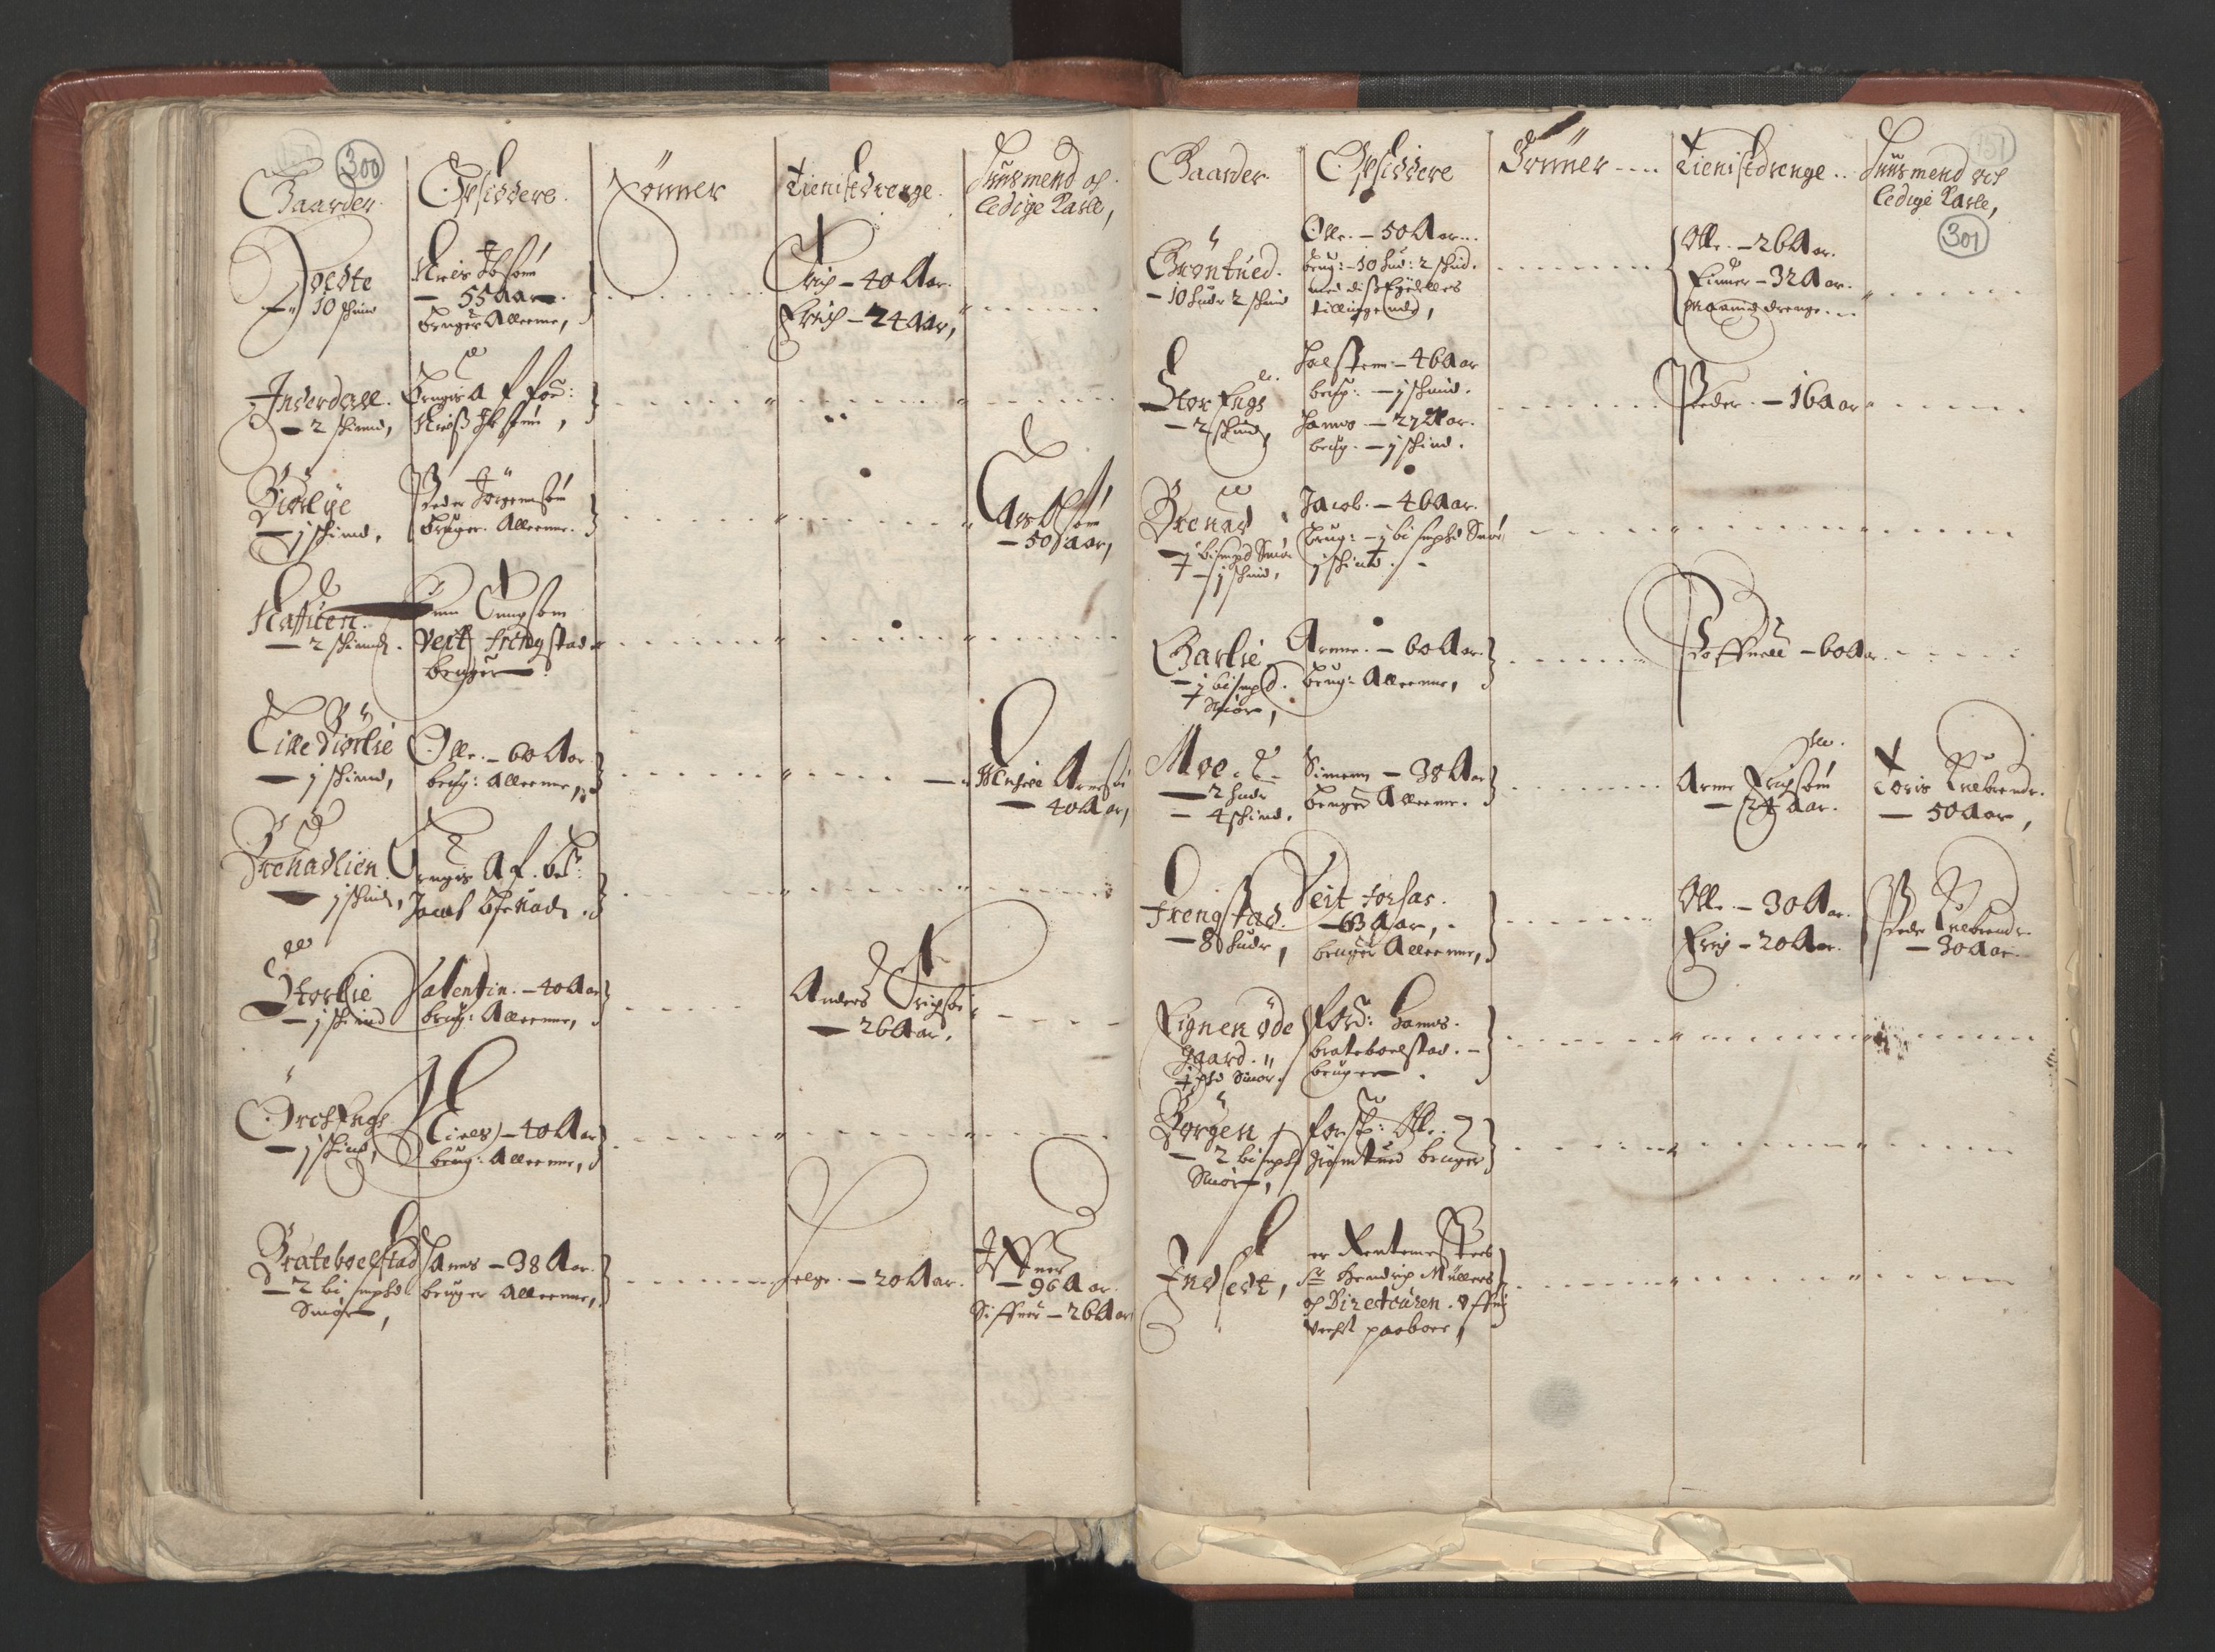 RA, Fogdenes og sorenskrivernes manntall 1664-1666, nr. 3: Hedmark fogderi og Solør, Østerdal og Odal fogderi, 1664, s. 300-301